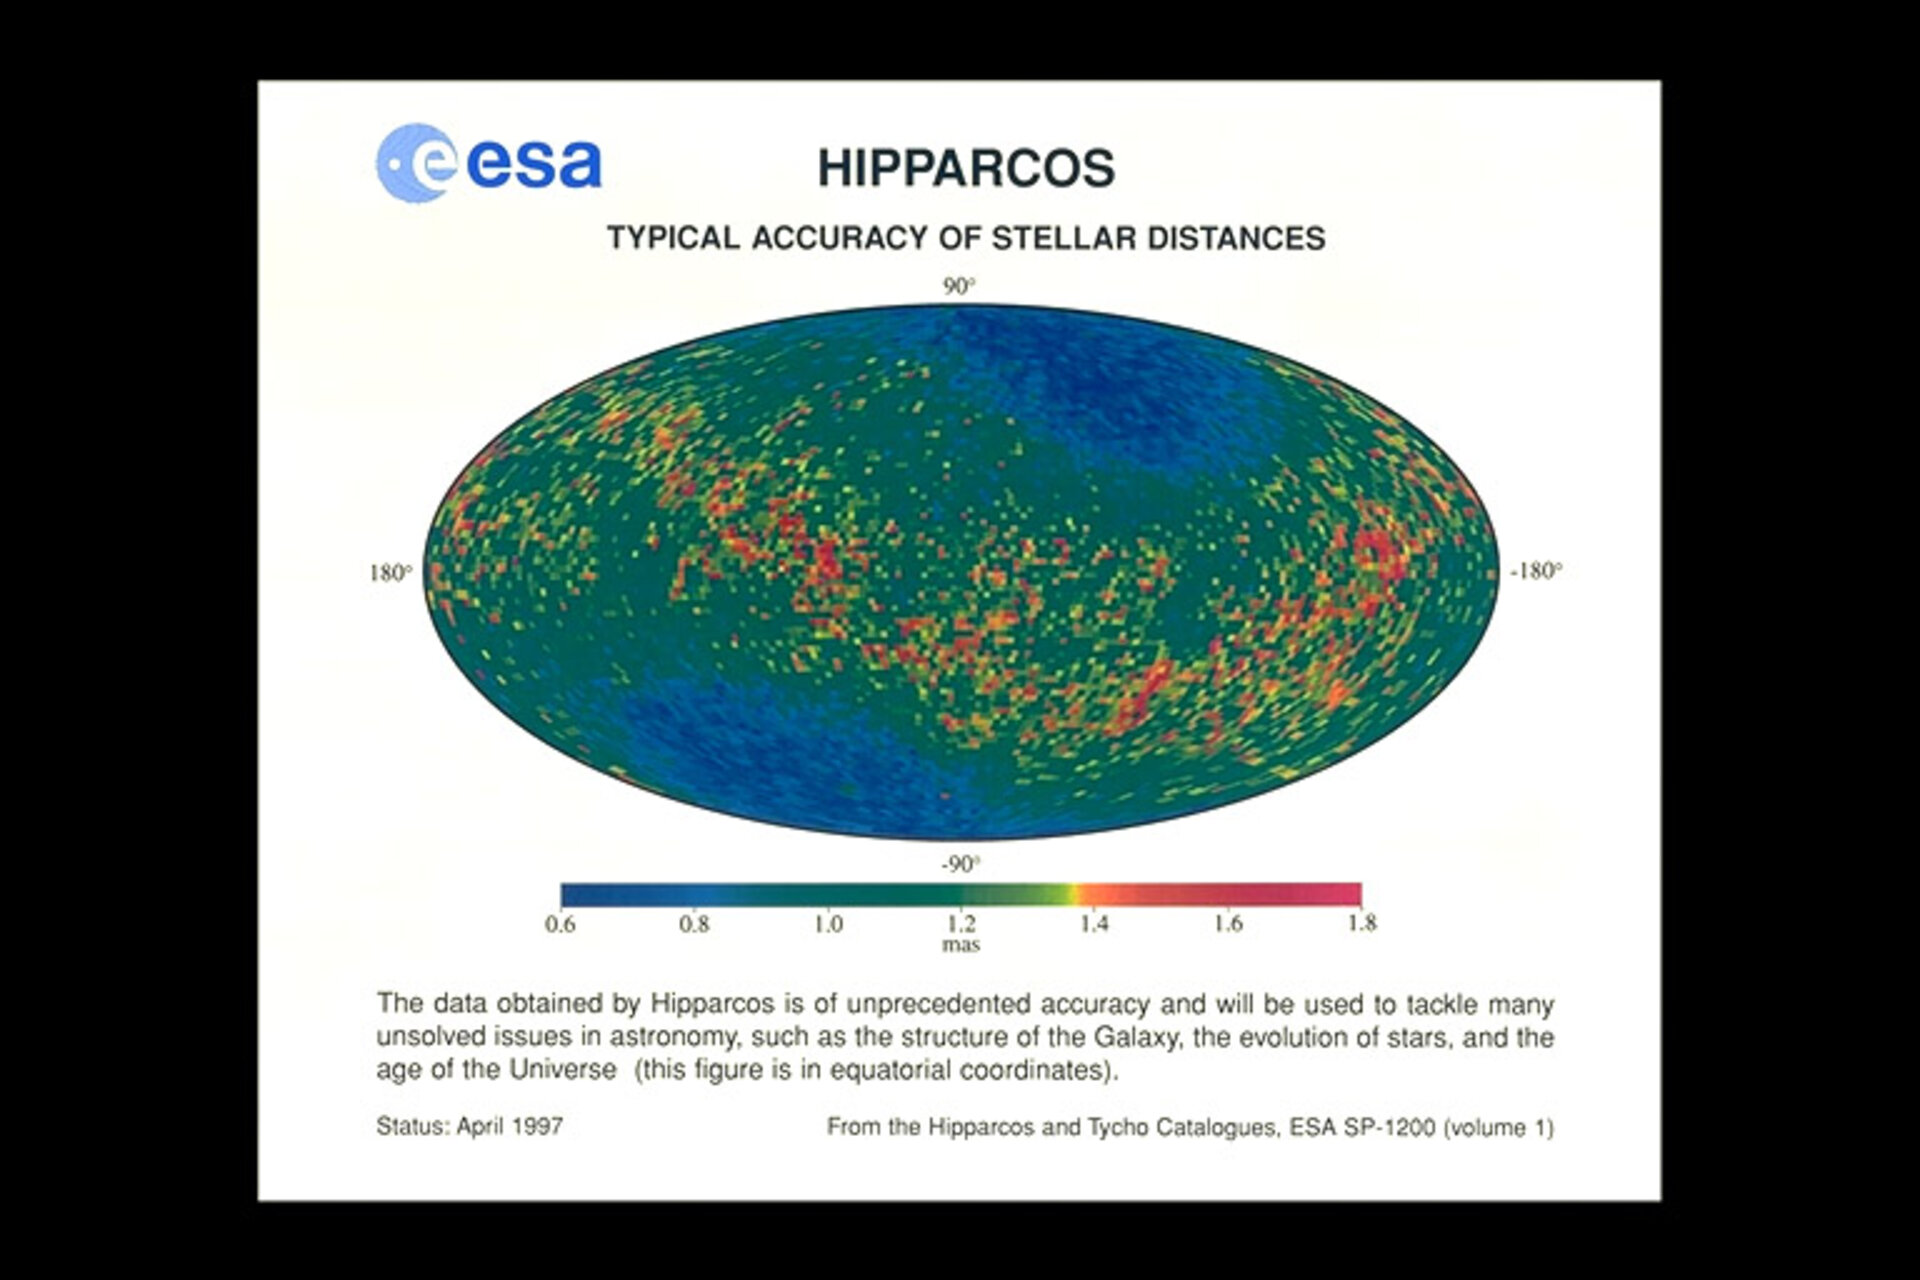 Accuracy of Hipparcos stellar distances